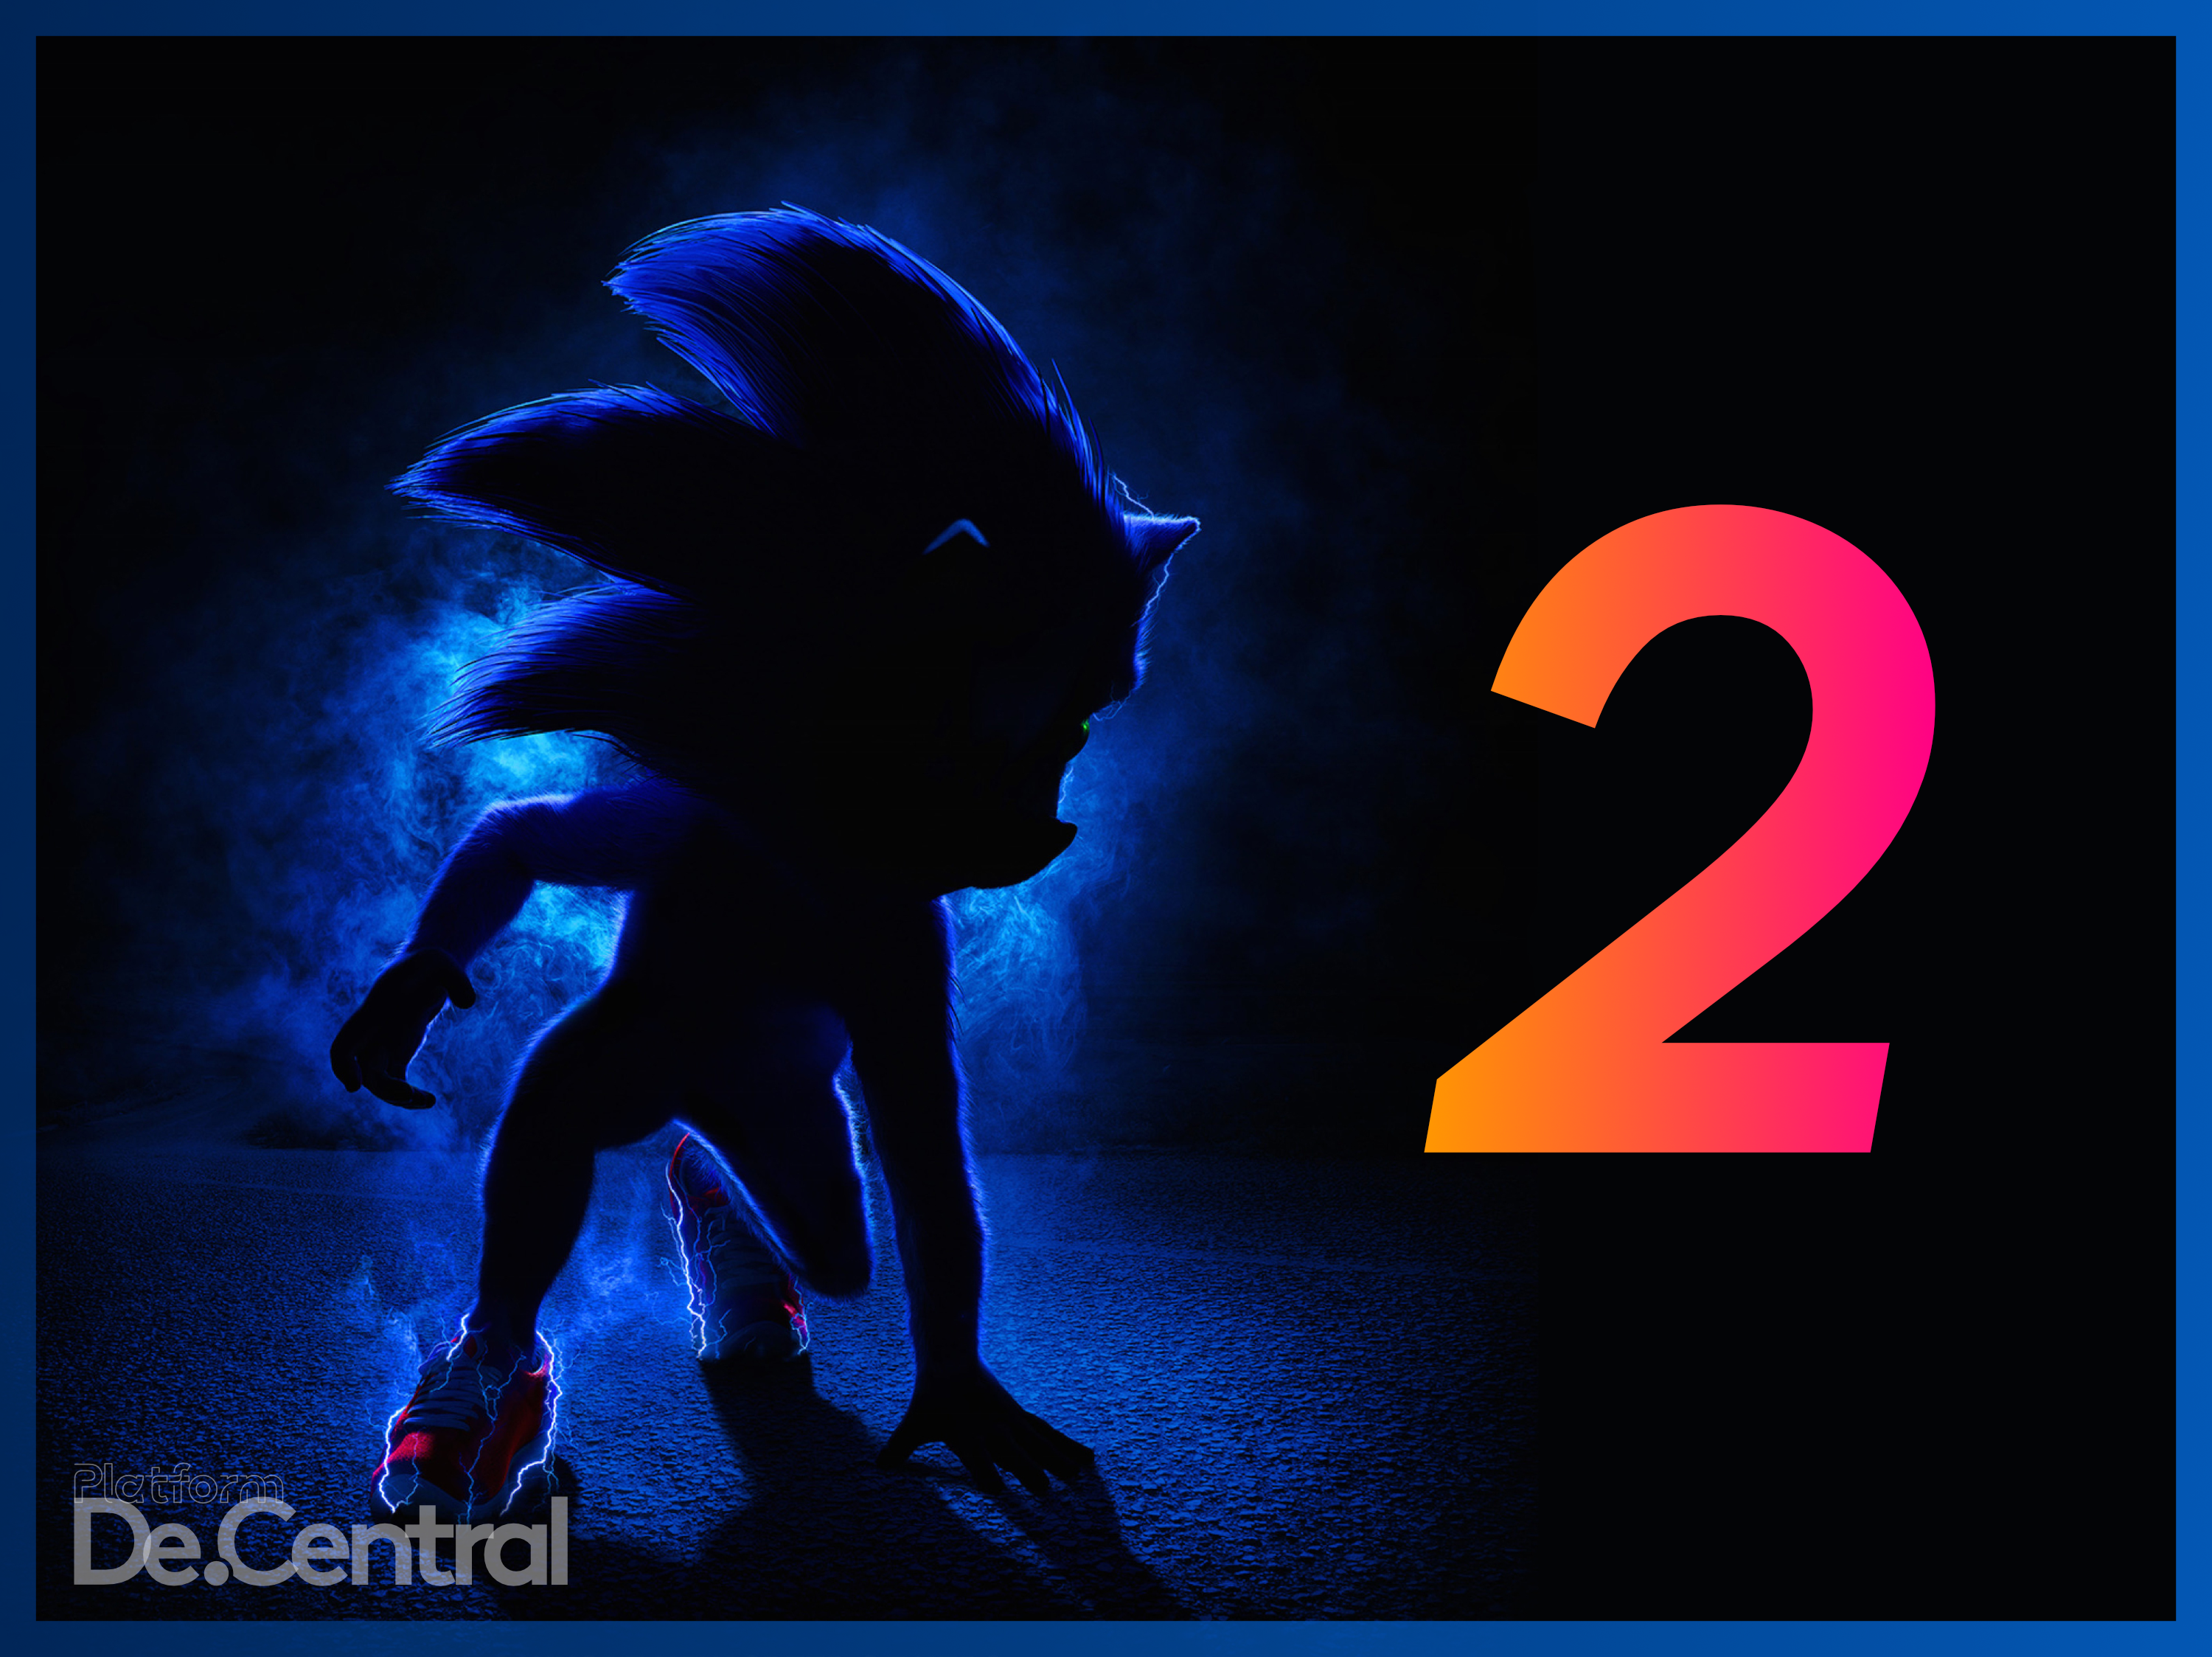 Sonic the Hedgehog sequel in development